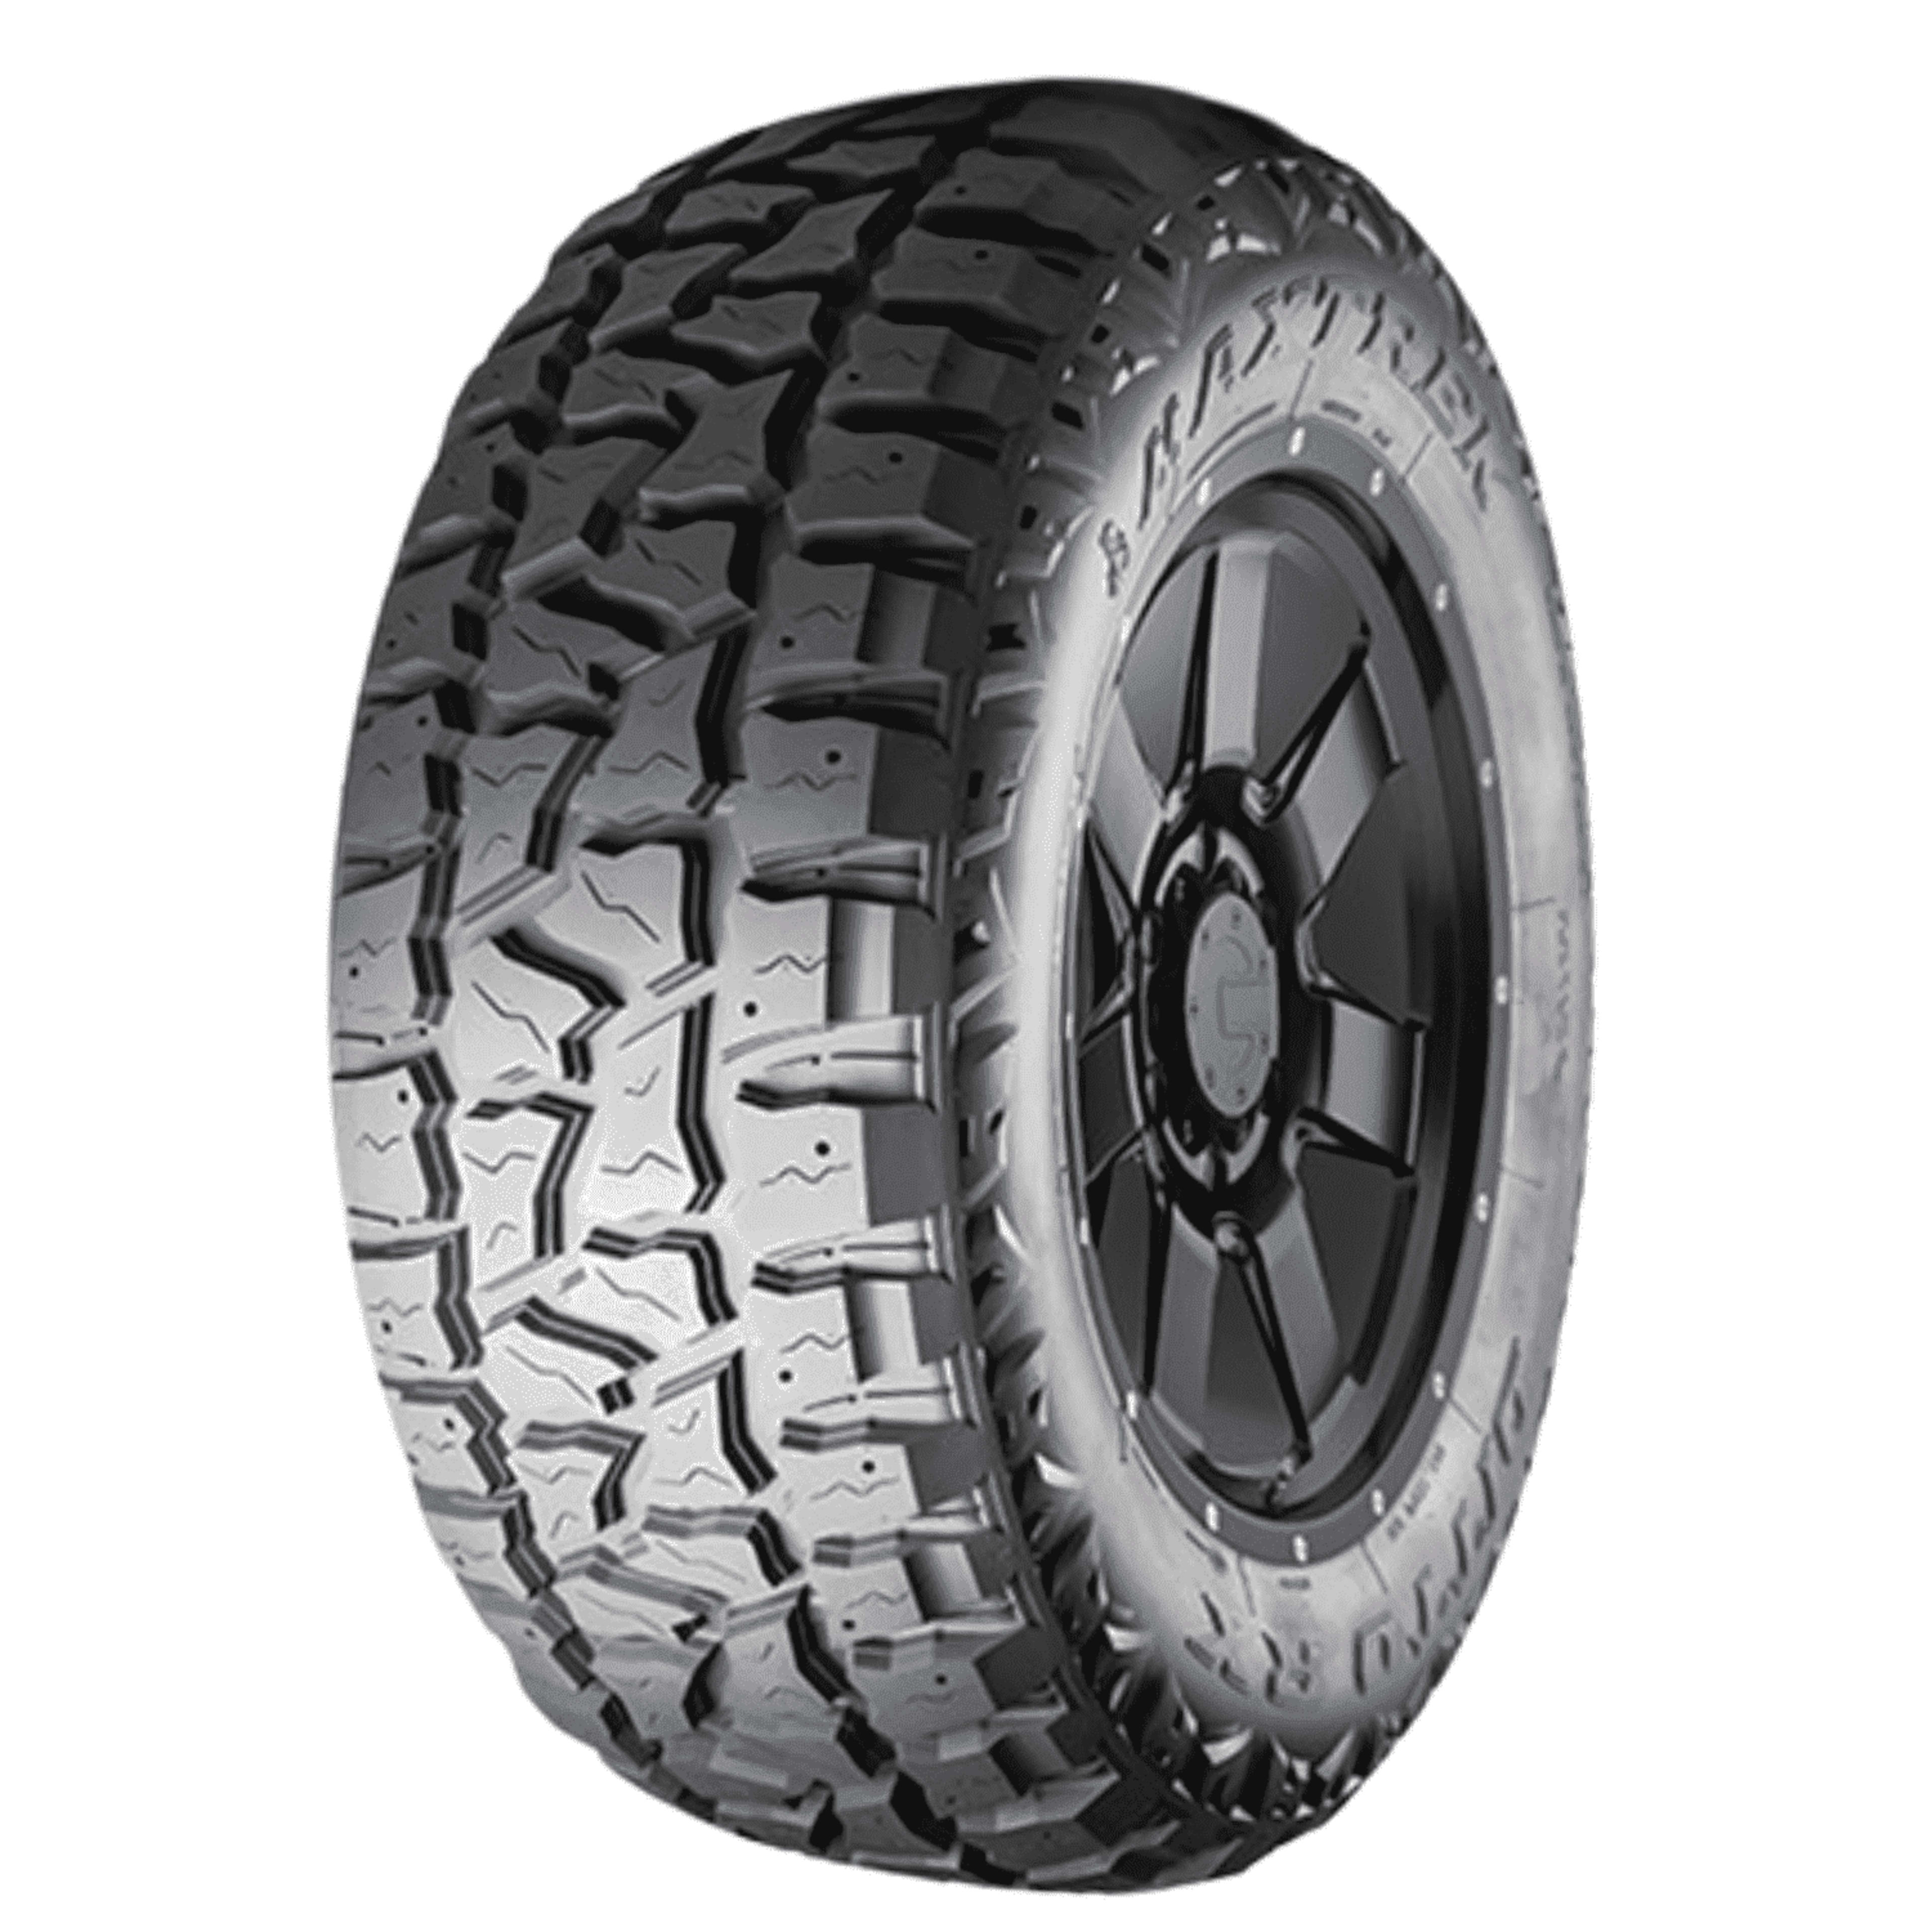 Buy Goodyear Wrangler Trailmark Tires Online | SimpleTire